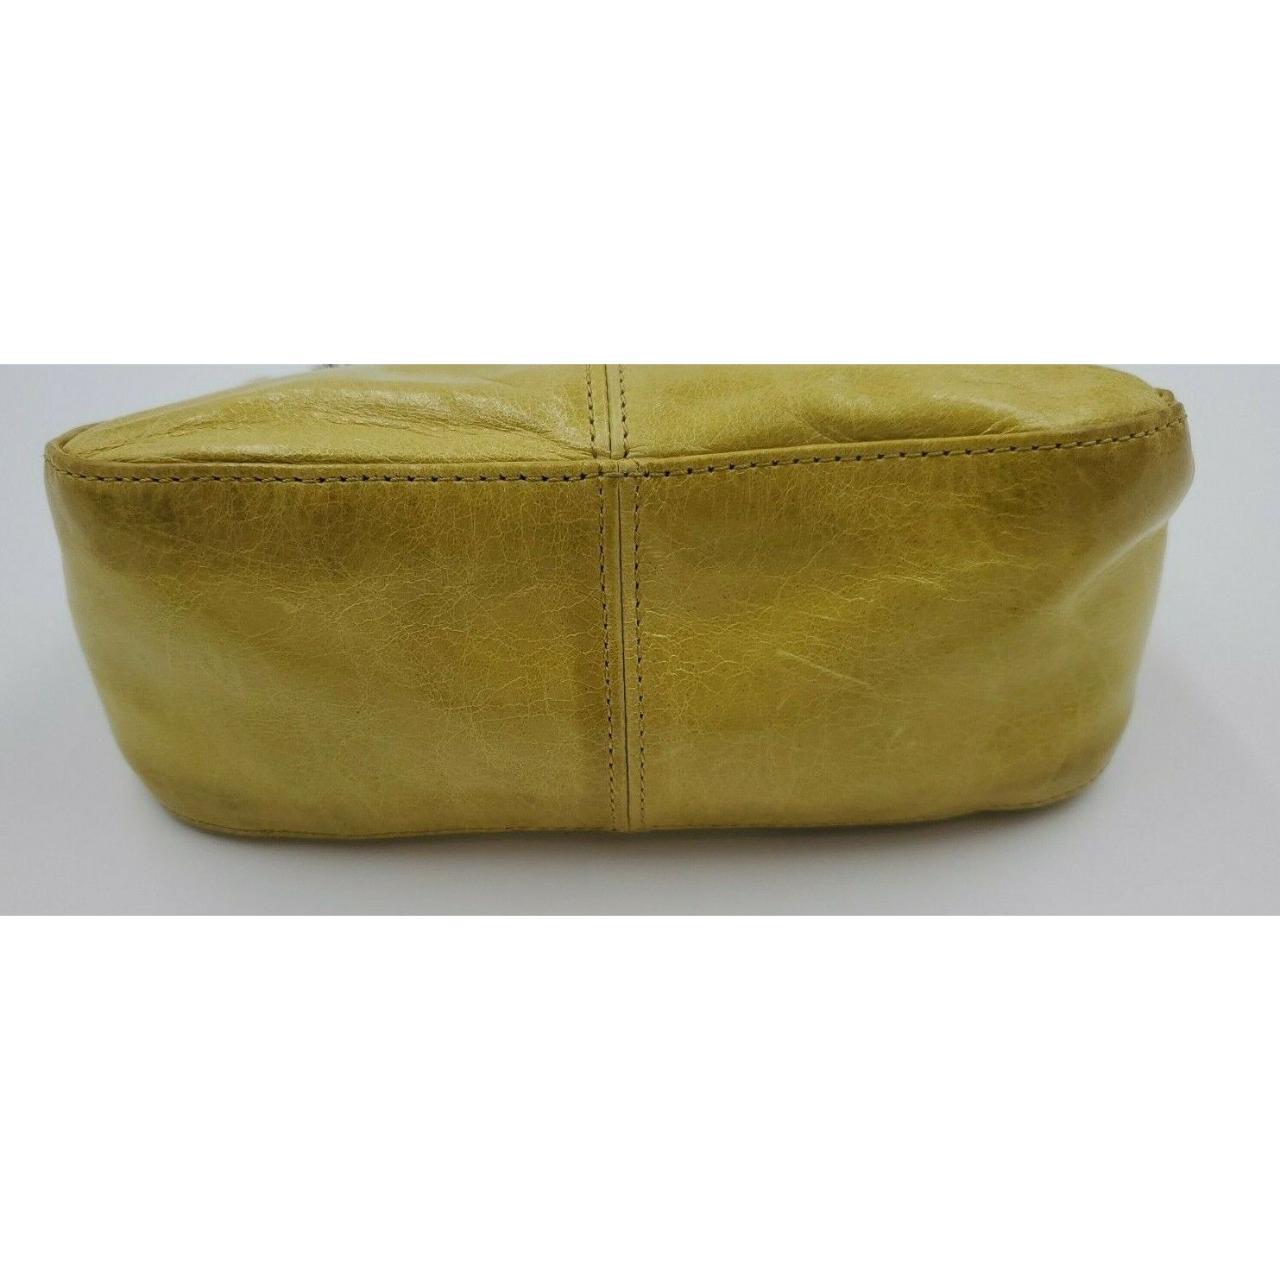 Hobo International Handbags Vintage Leather Finley Tote Bag – Henna |  Accessorising - Brand Name / Designer Handbags For Carry & Wear... Share If  You Care! | Hobo international handbags, Leather hobo